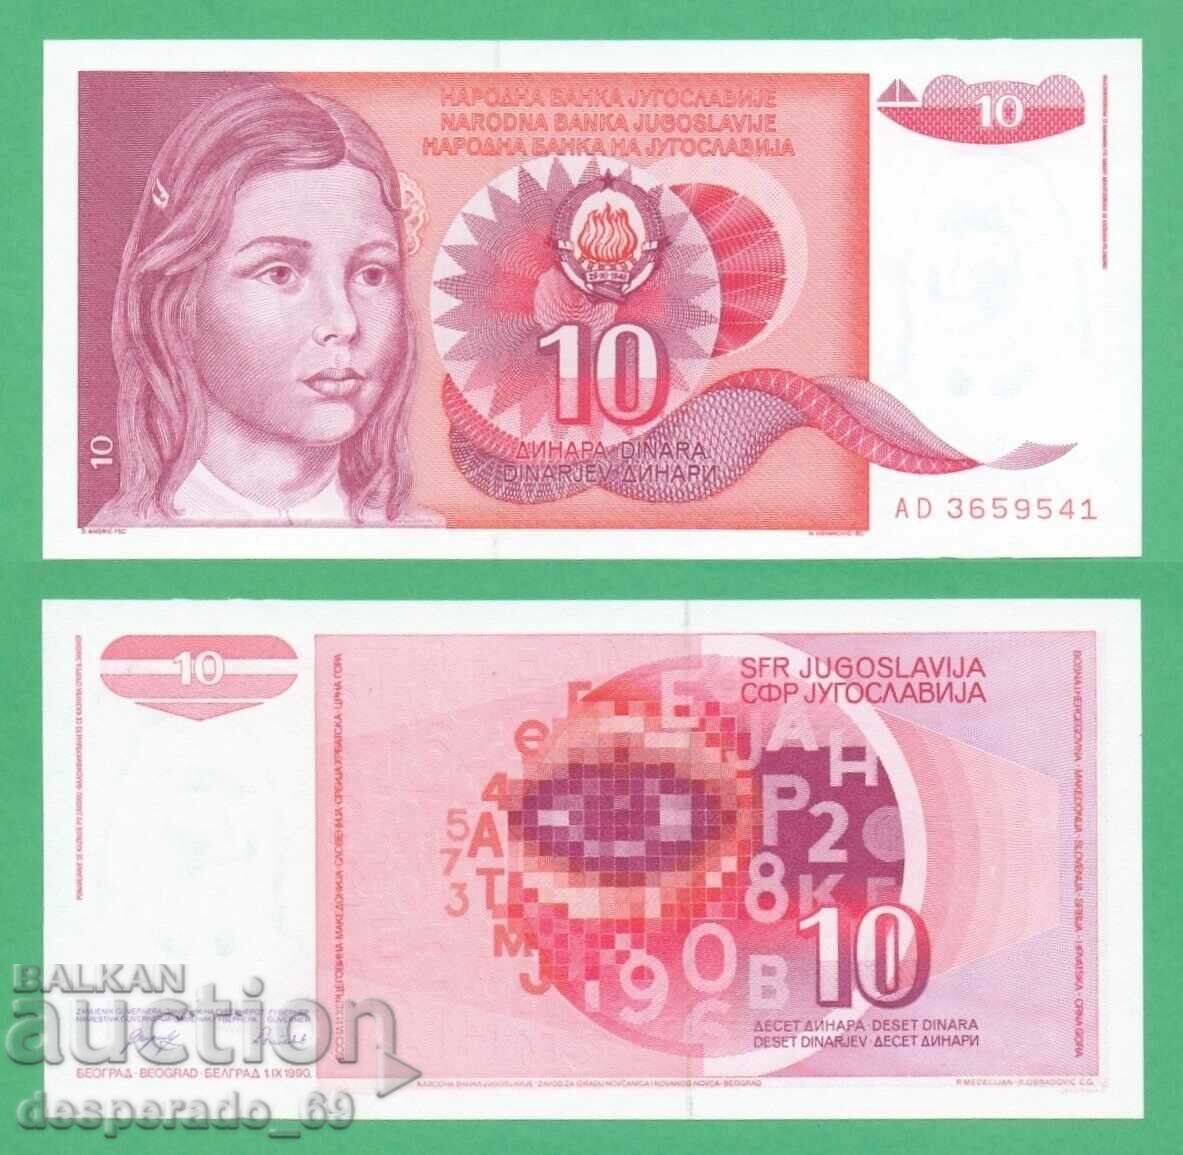 (¯`'•.¸ IUGOSLAVIA 10 dinari 1990 UNC ¸.•'´¯)